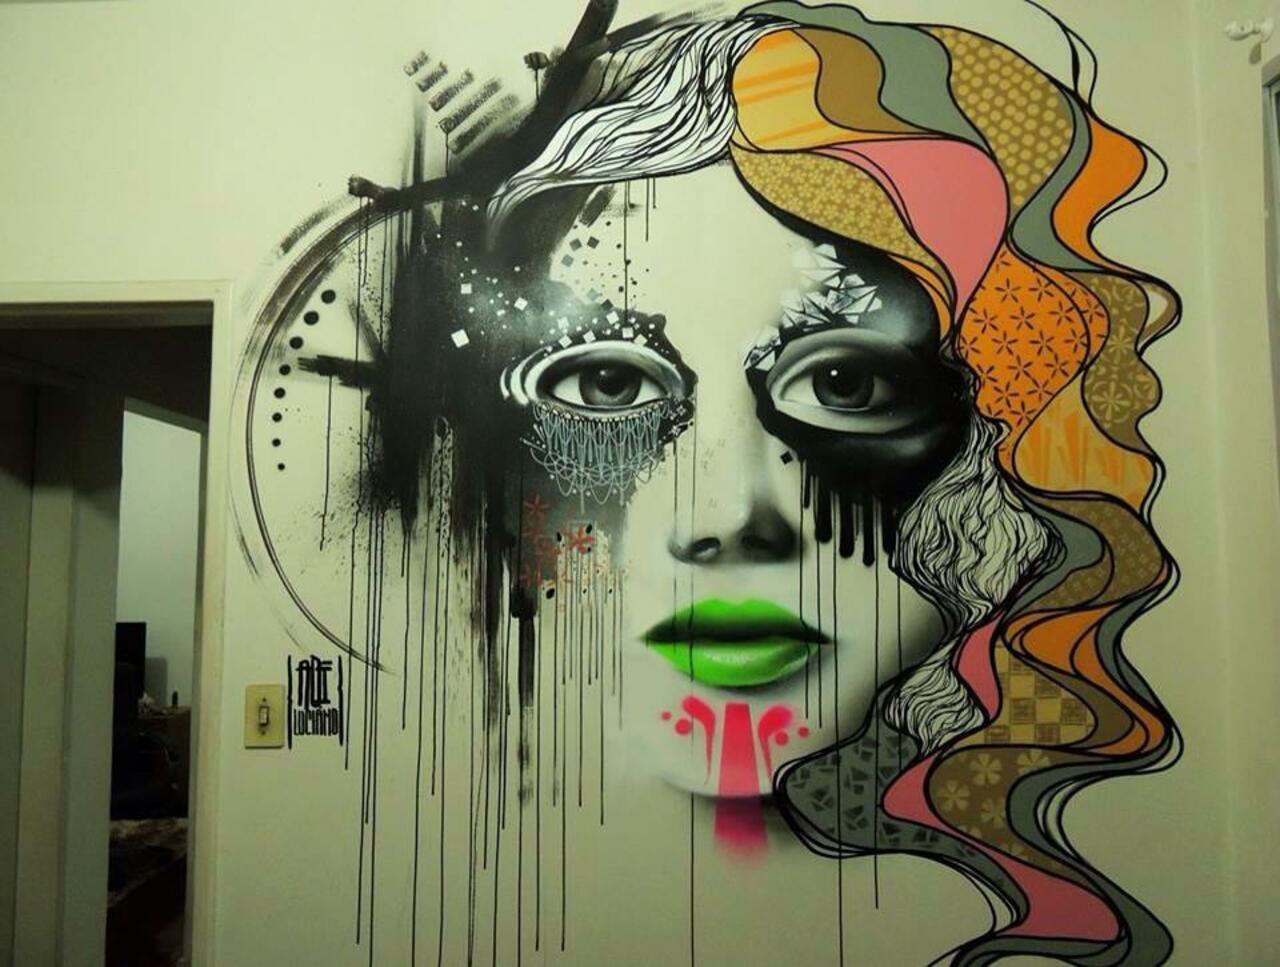 RT @designopinion: Artist @aqiluciano (Aqi Luciano) wonderful new Street Art works #art #mural #graffiti #streetart http://t.co/v5rNau0mKR